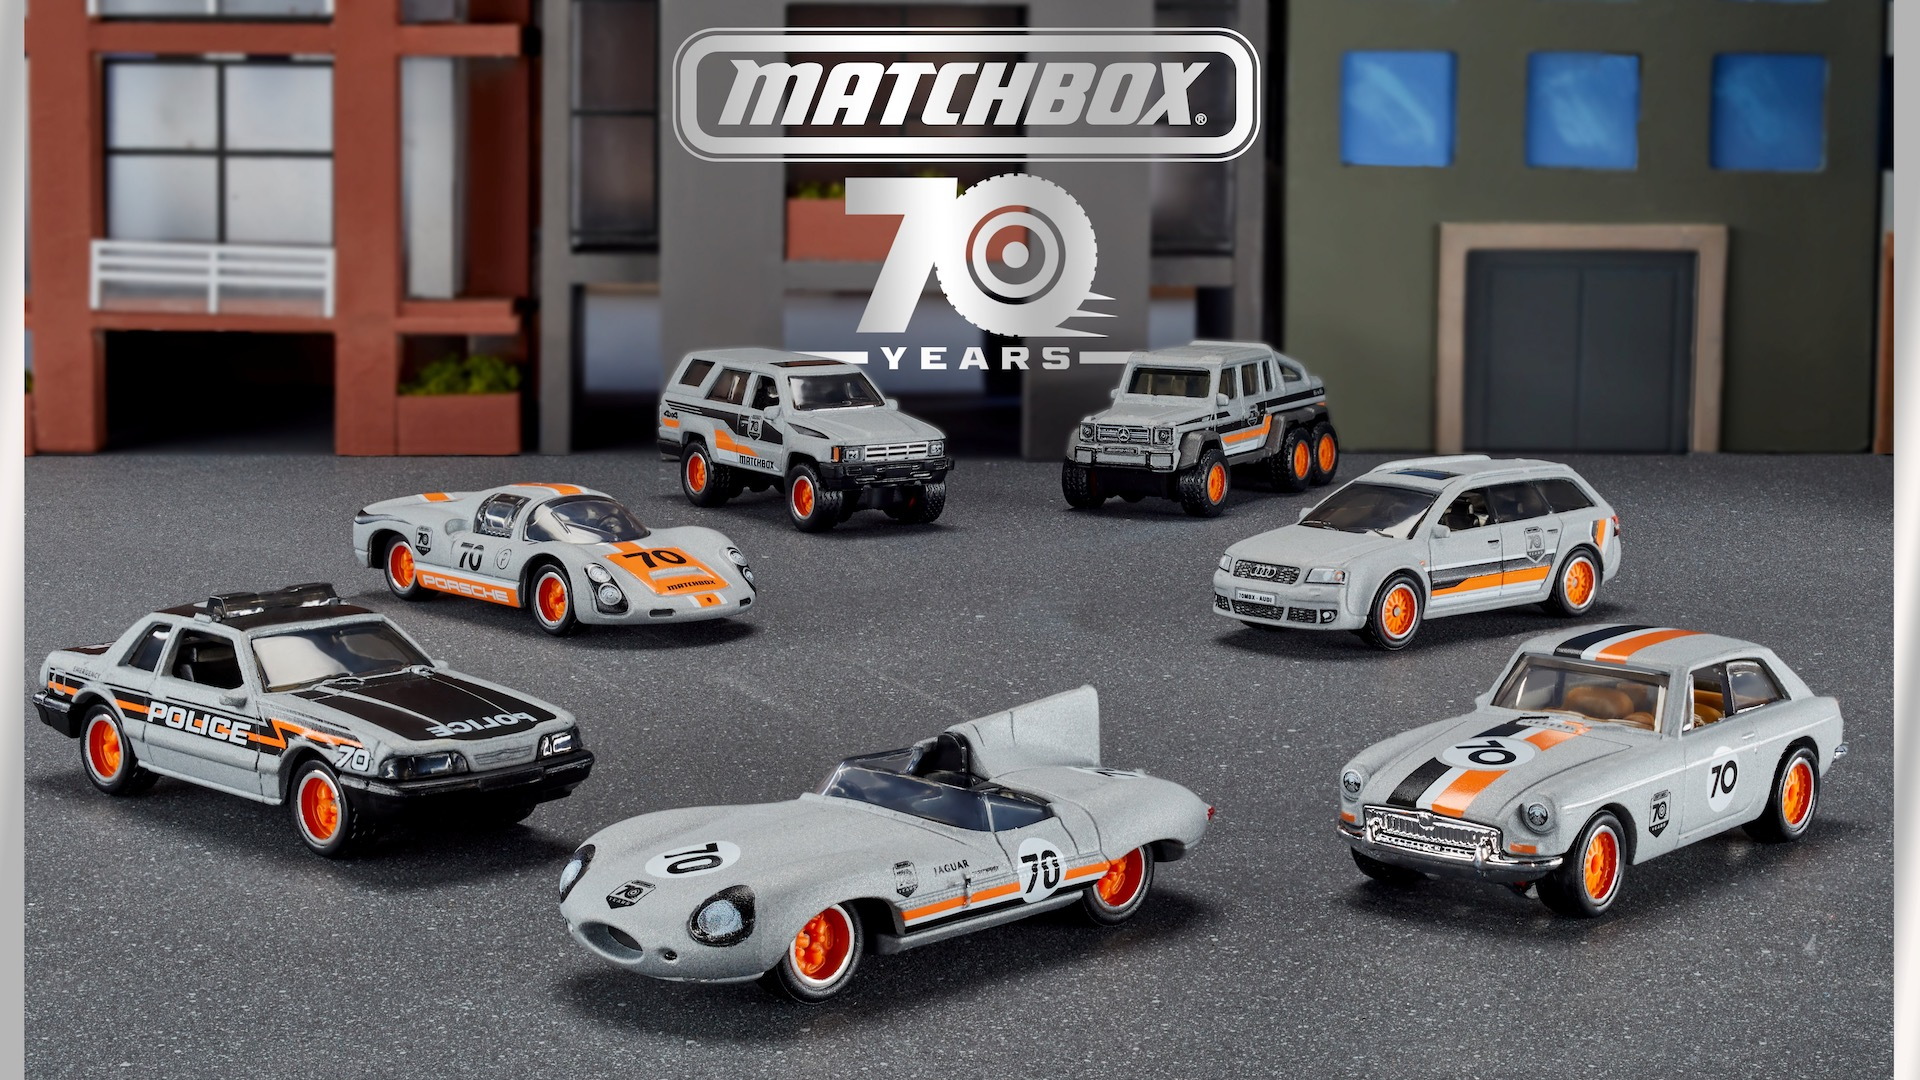 Matchbox 70th anniversary cars